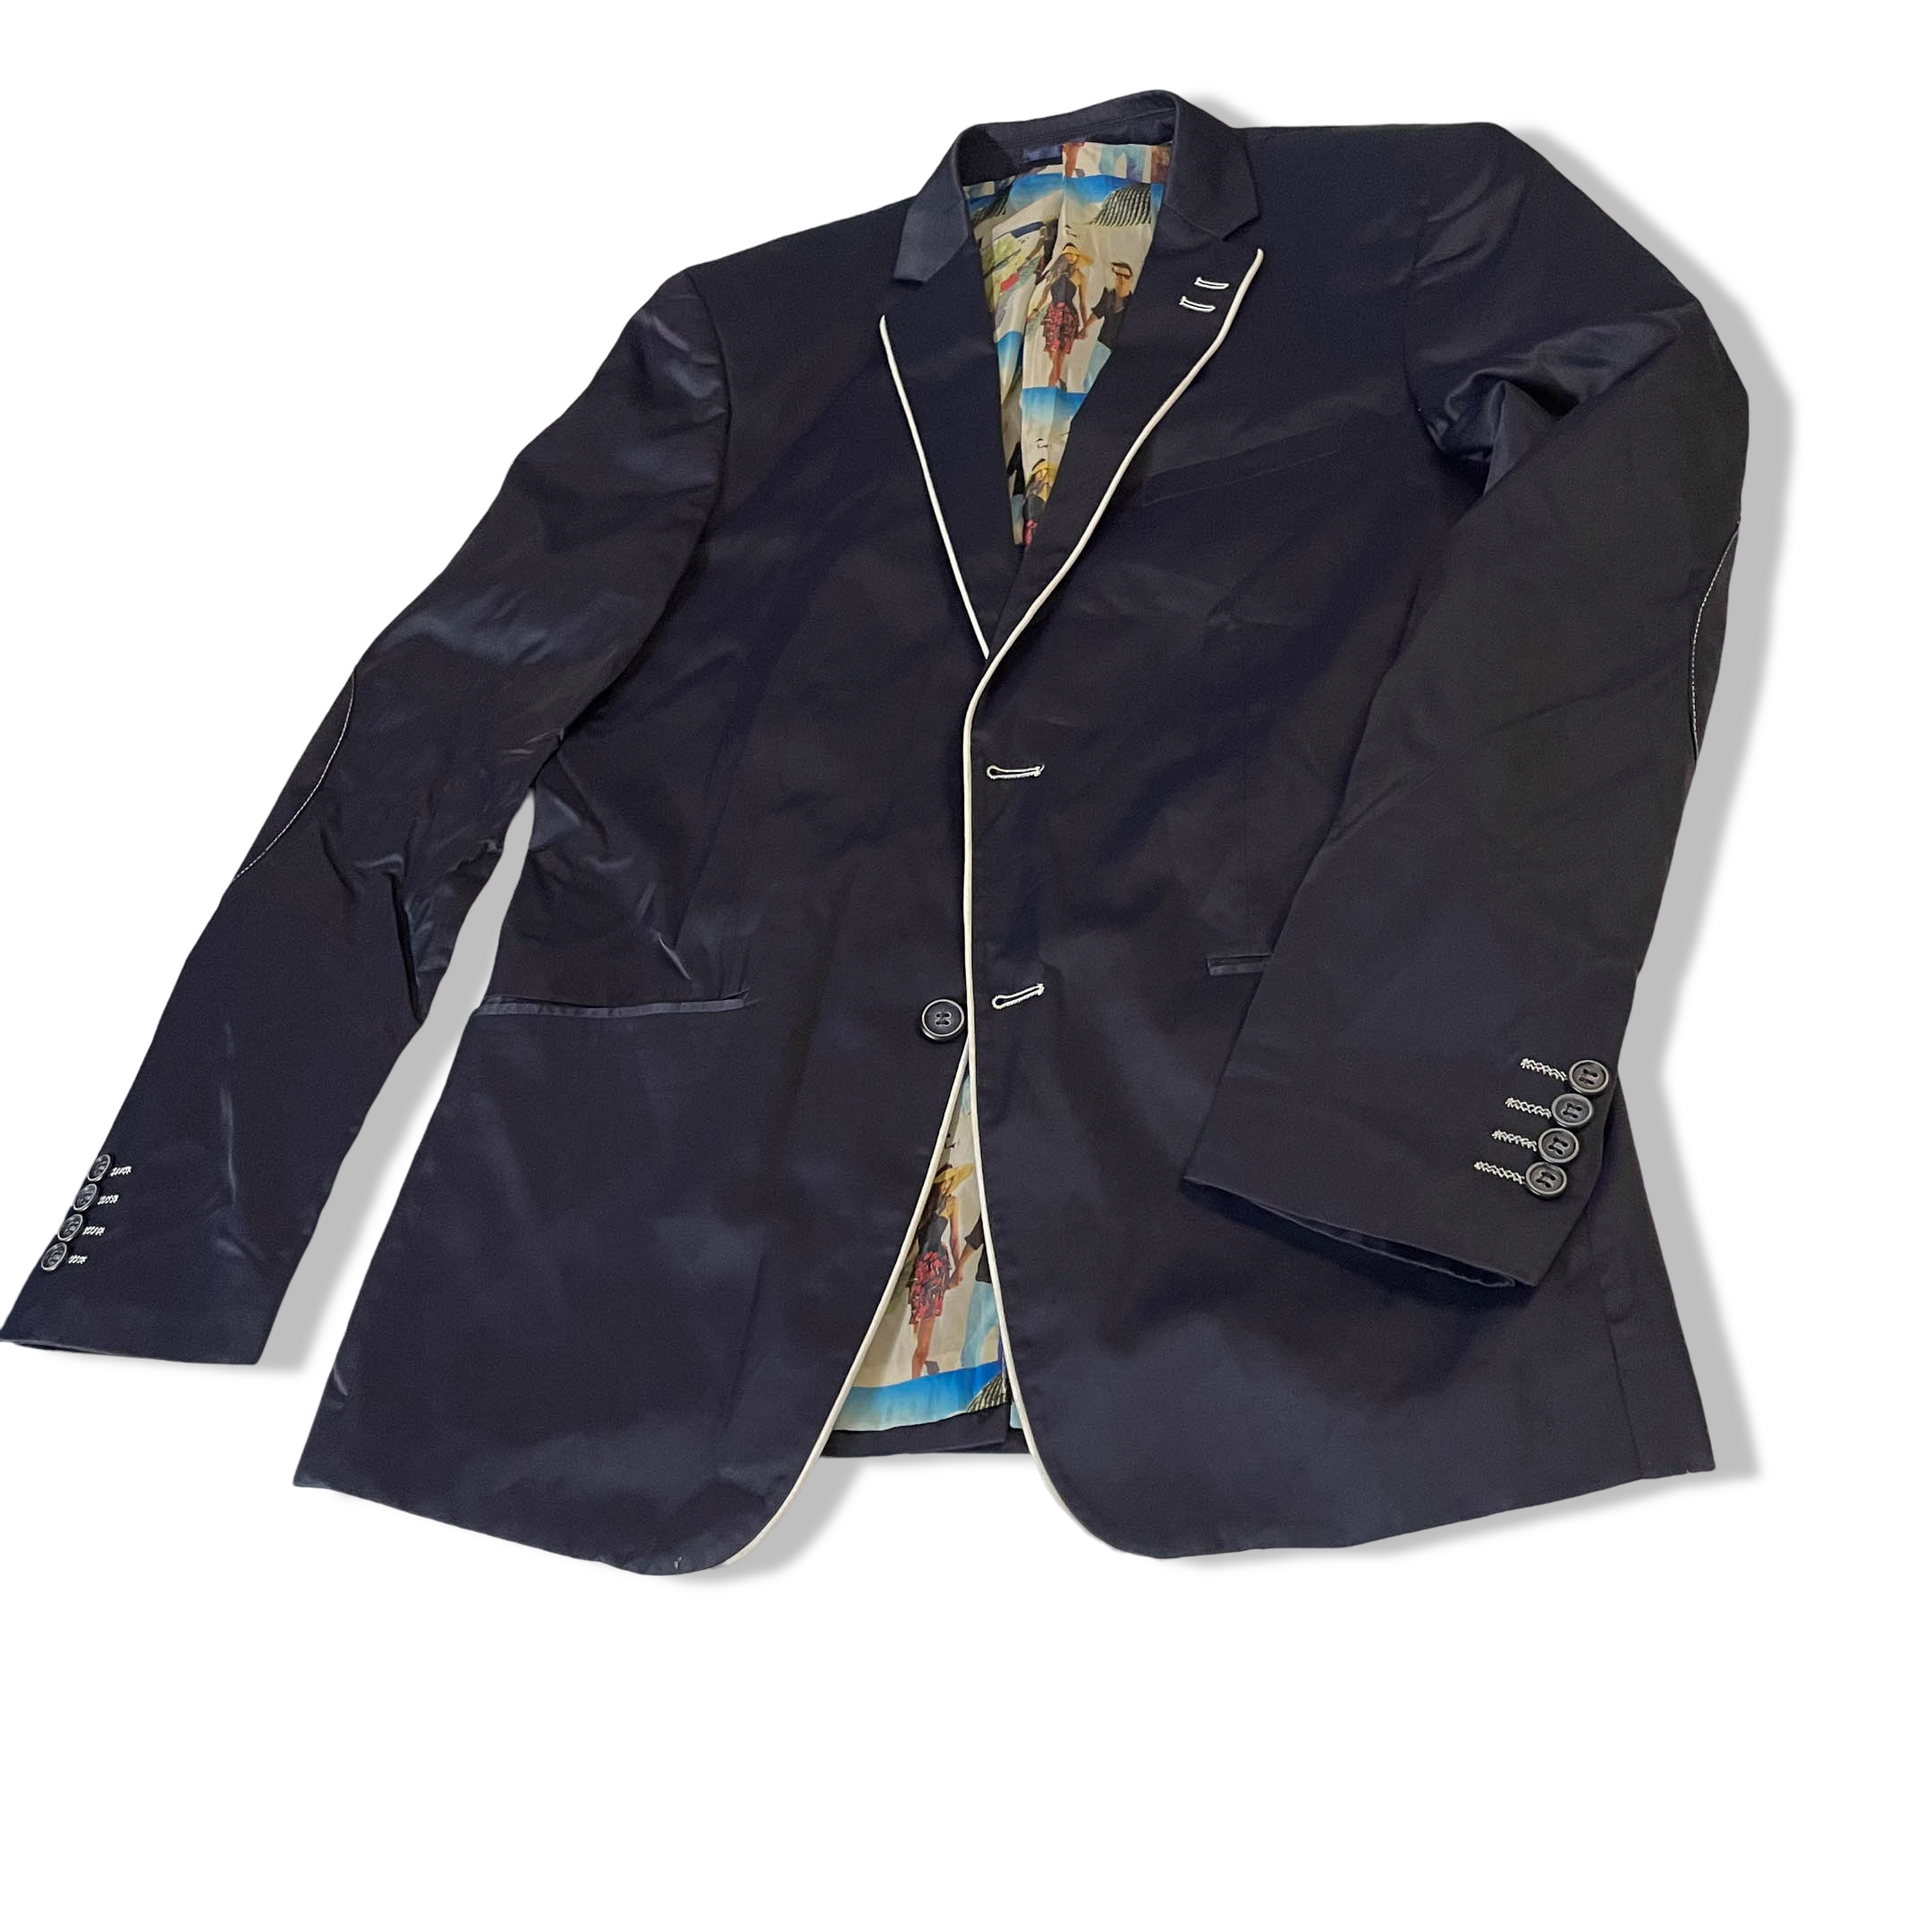 Vintage Vouet men's tailored fit navy blazer EU 43R|L31 W 21| SKU 3764